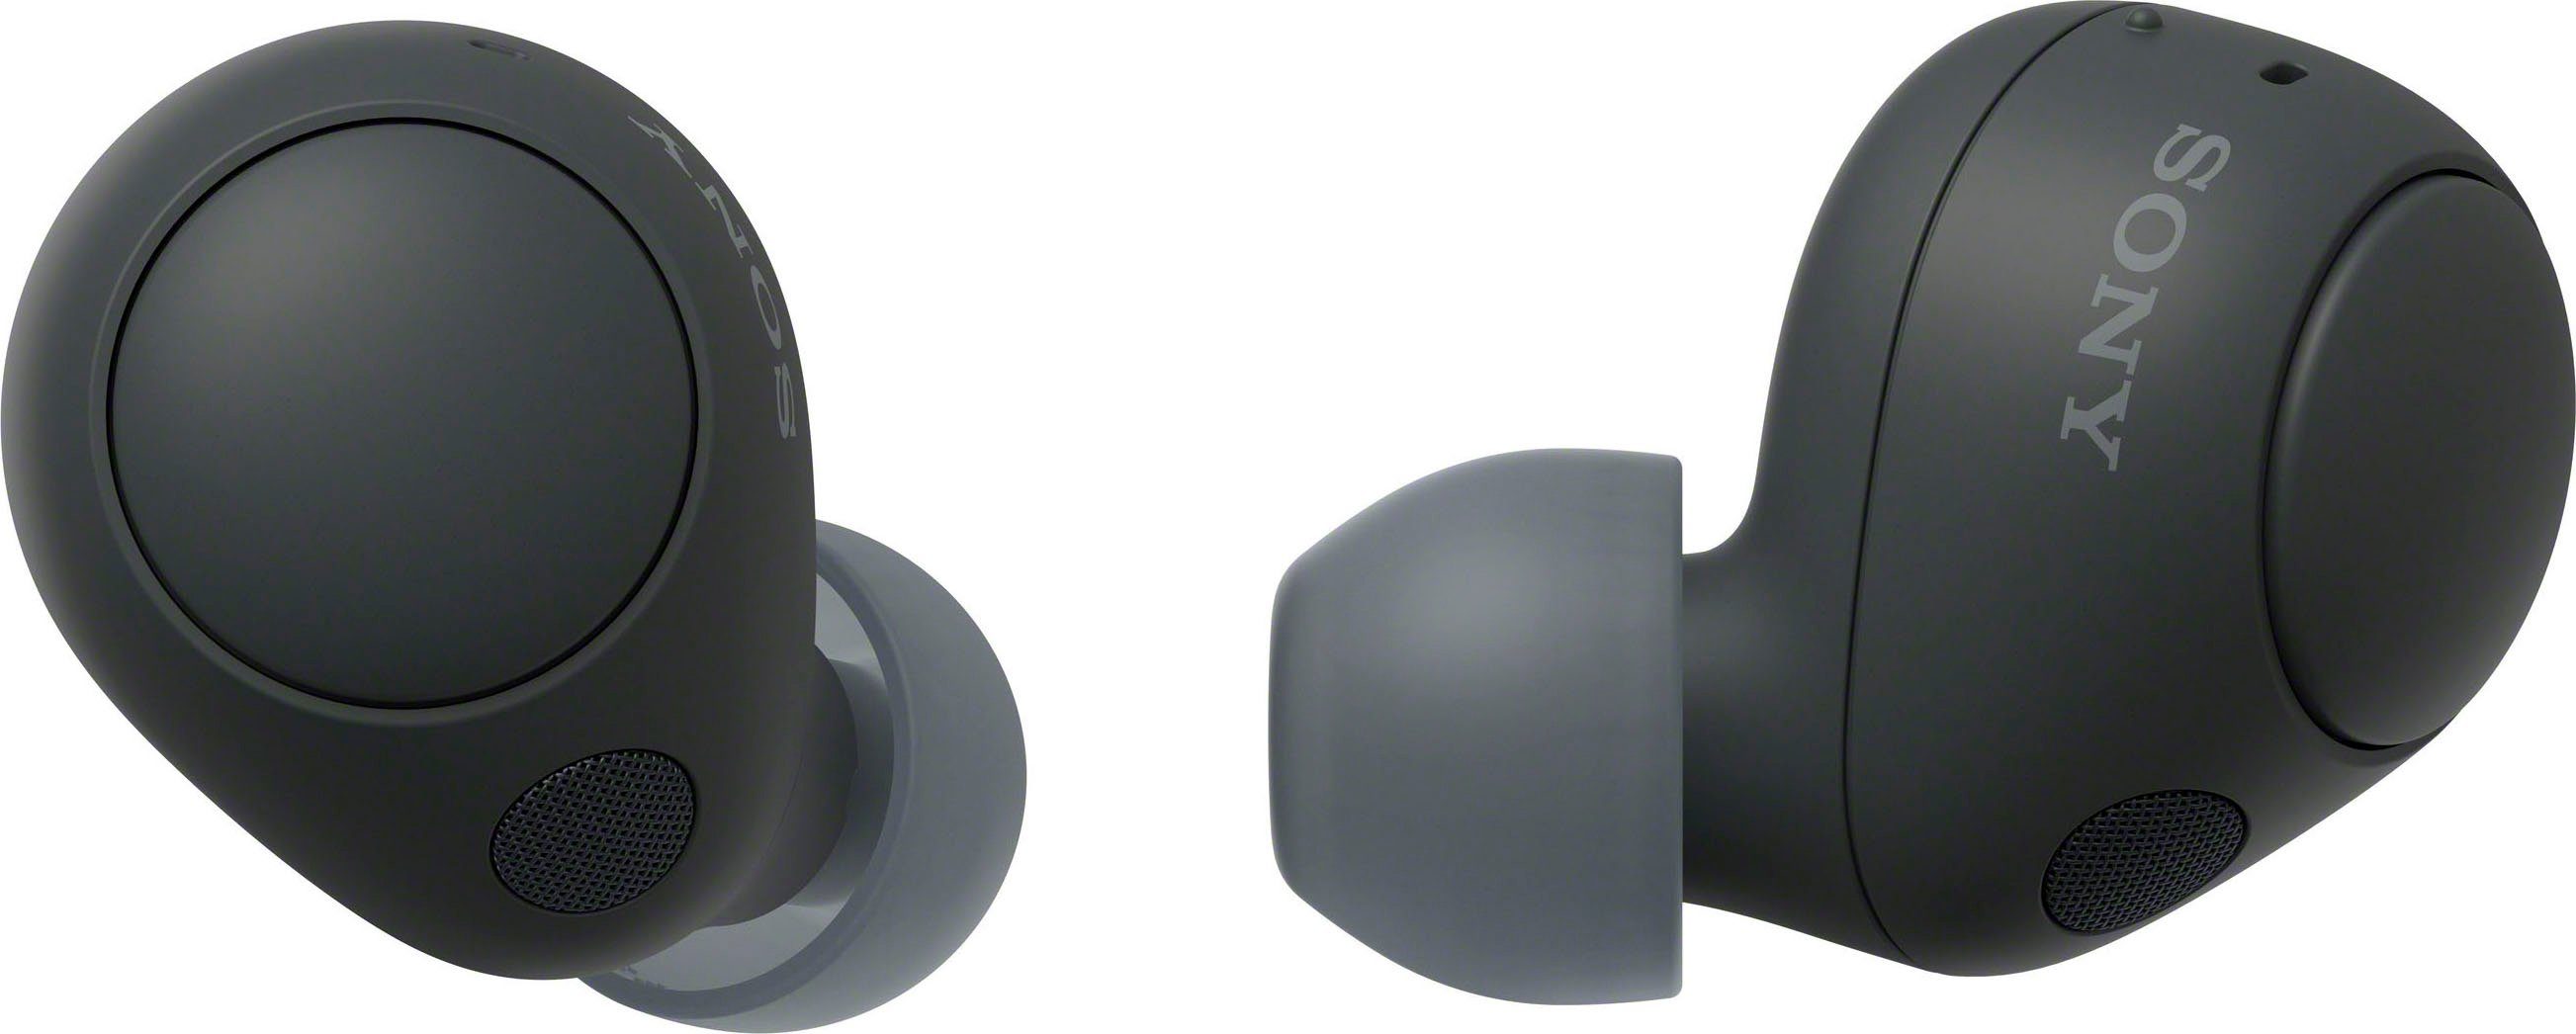 Sony WF-C700N In-Ear-Kopfhörer (Noise-Cancelling, Bluetooth, bis 20 Std. Akkulaufzeit, Multipoint Connection) Gojischwarz | In-Ear-Kopfhörer